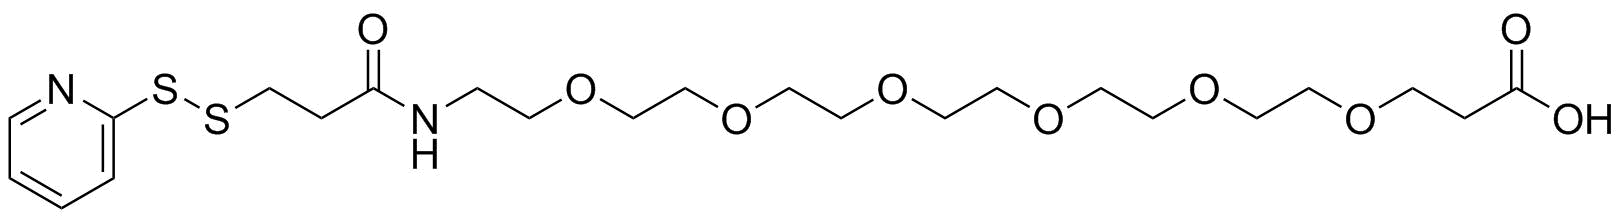 SPDP-PEG6-acid